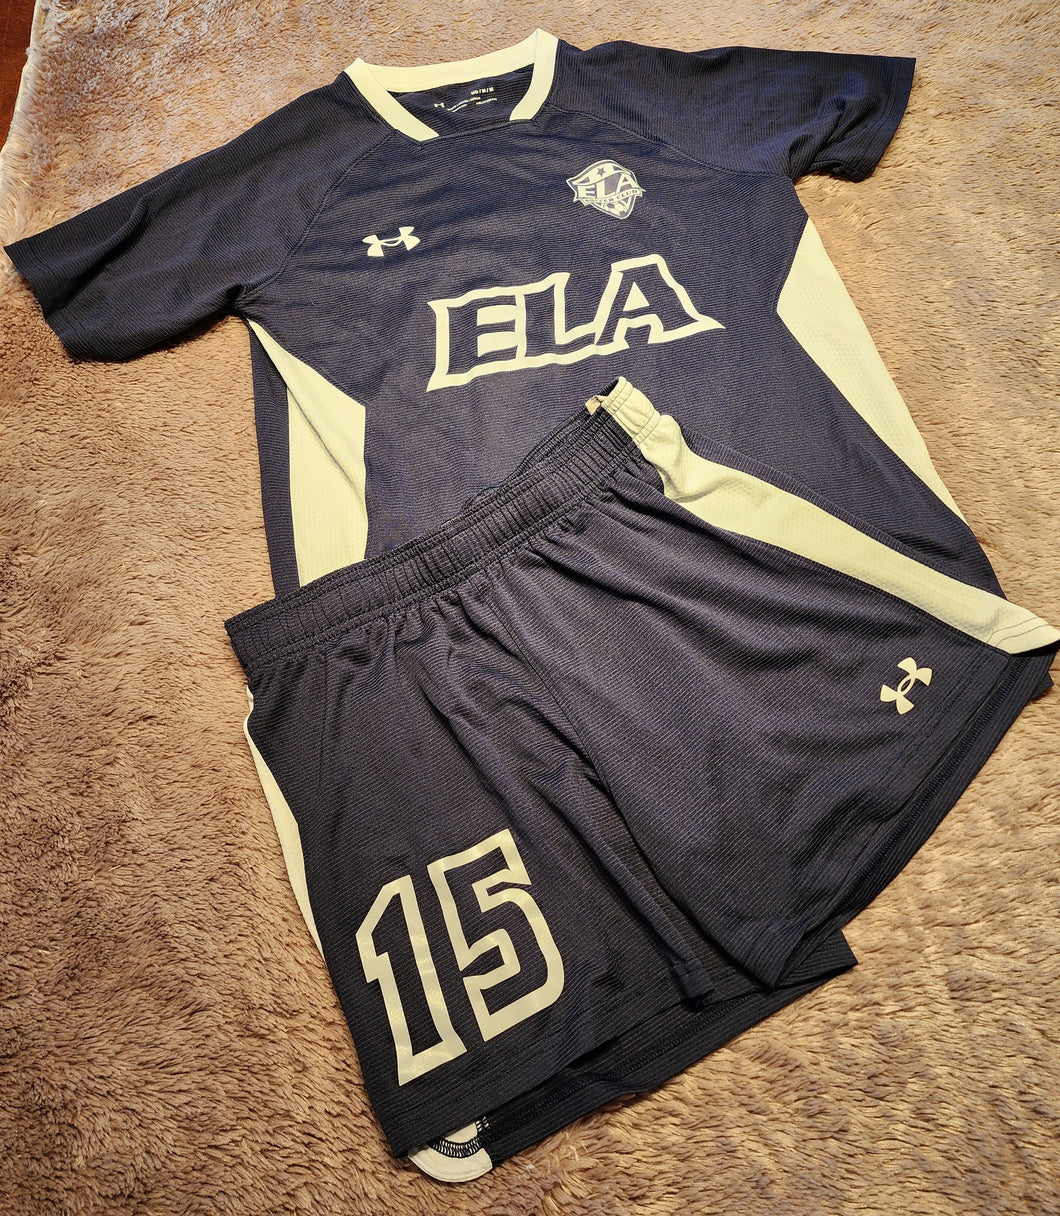 Under Armour HeatGear Ela Soccer jersey shirt ans shorts, size adult medium, navy Adult Medium